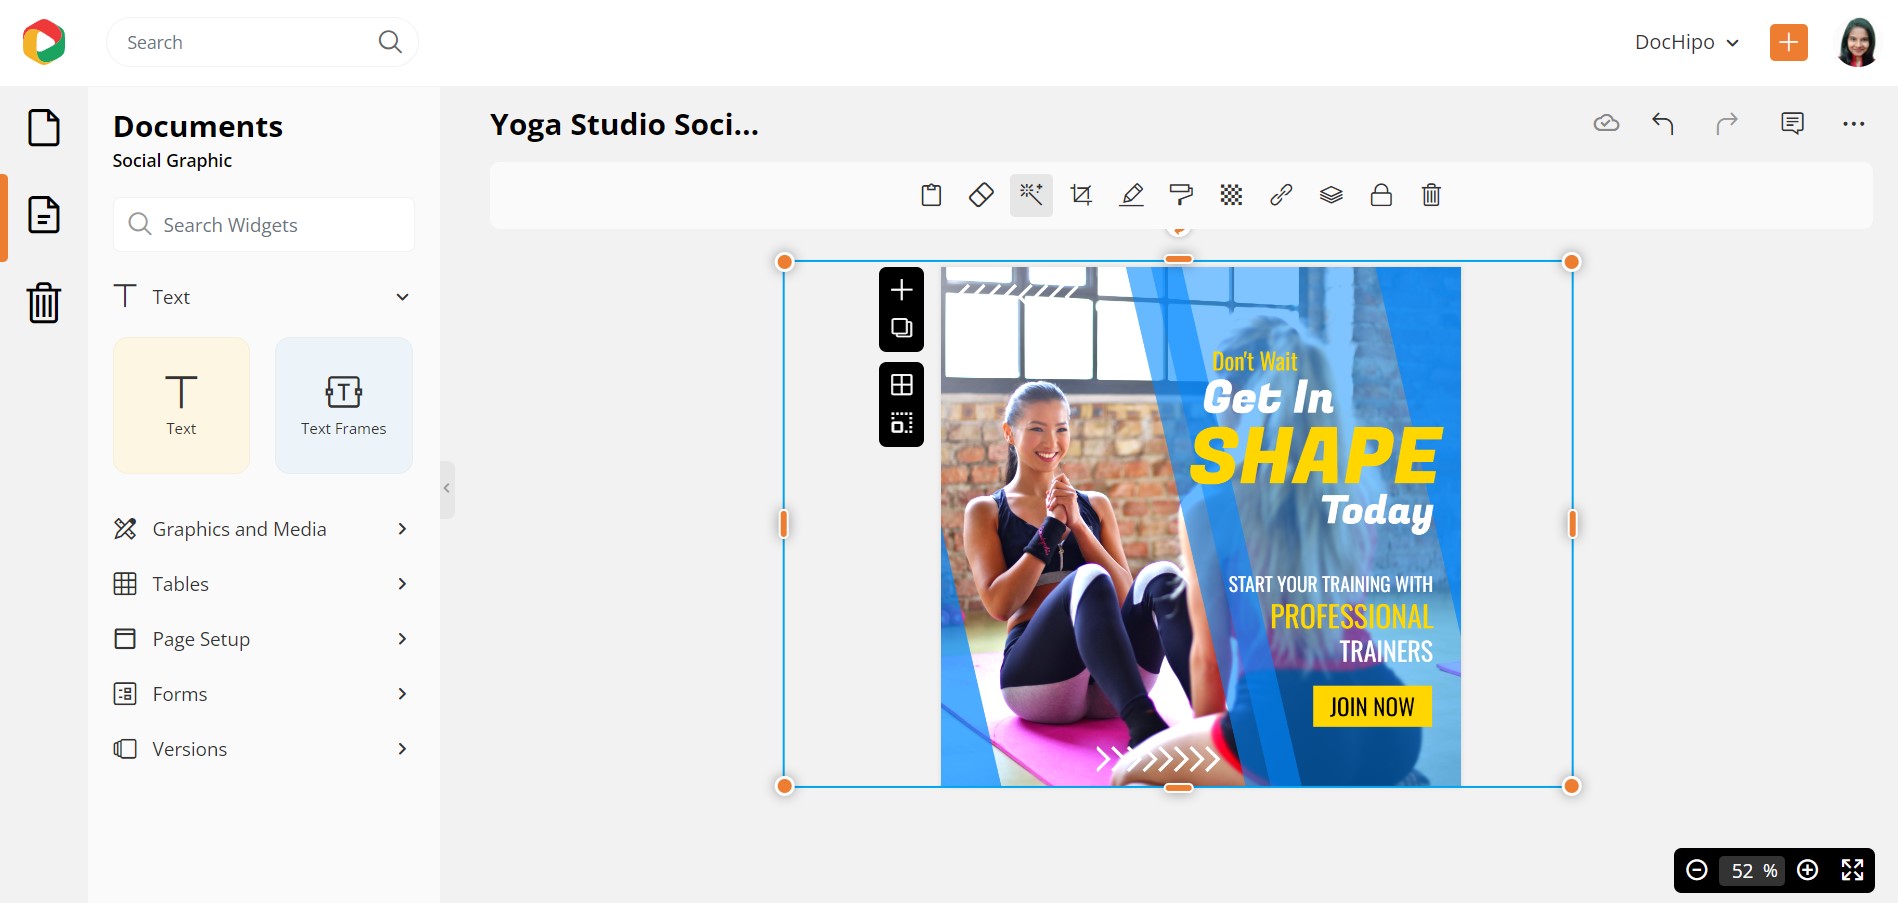 Yoga Social Media Post Design after Repositioning